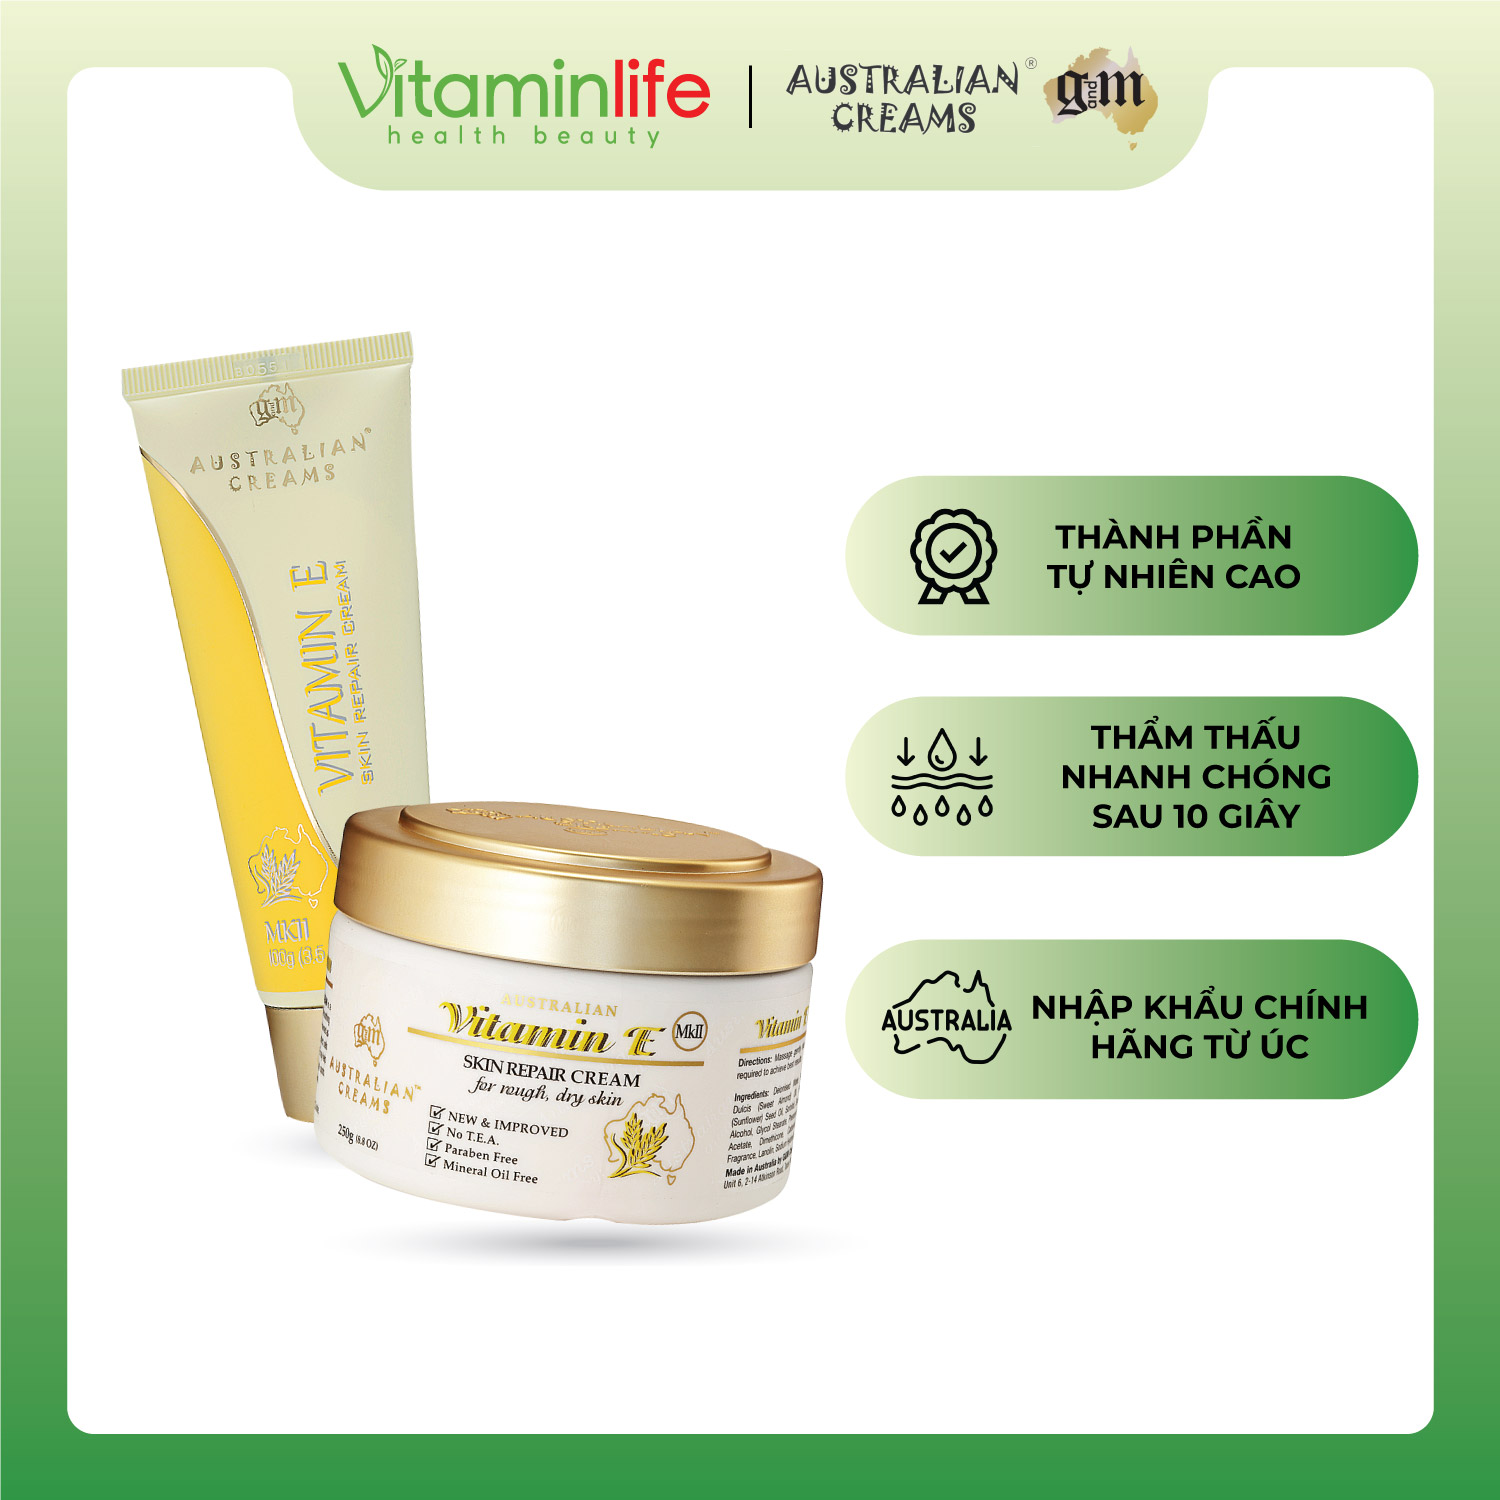 Kem dưỡng chăm sóc và phục hồi da Vitamin E Australian Creams MKII 100g